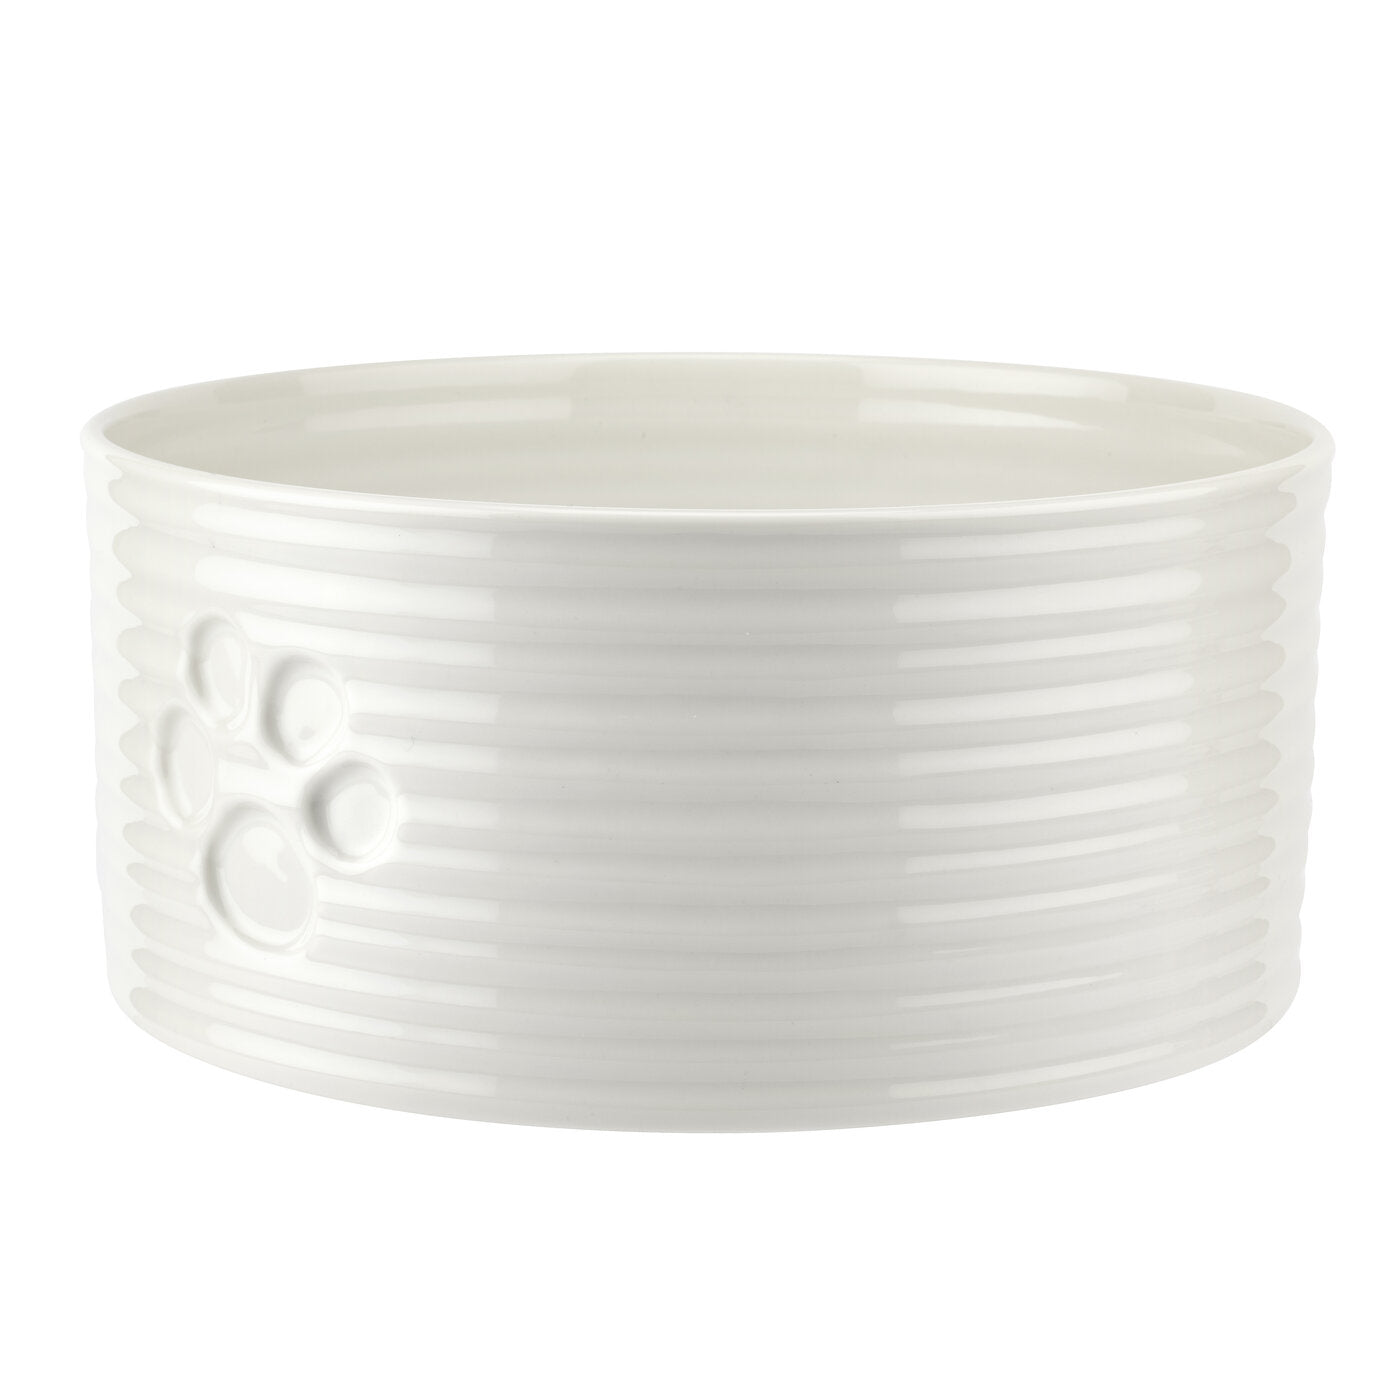 White Porcelain Pet Bowl 7.75"